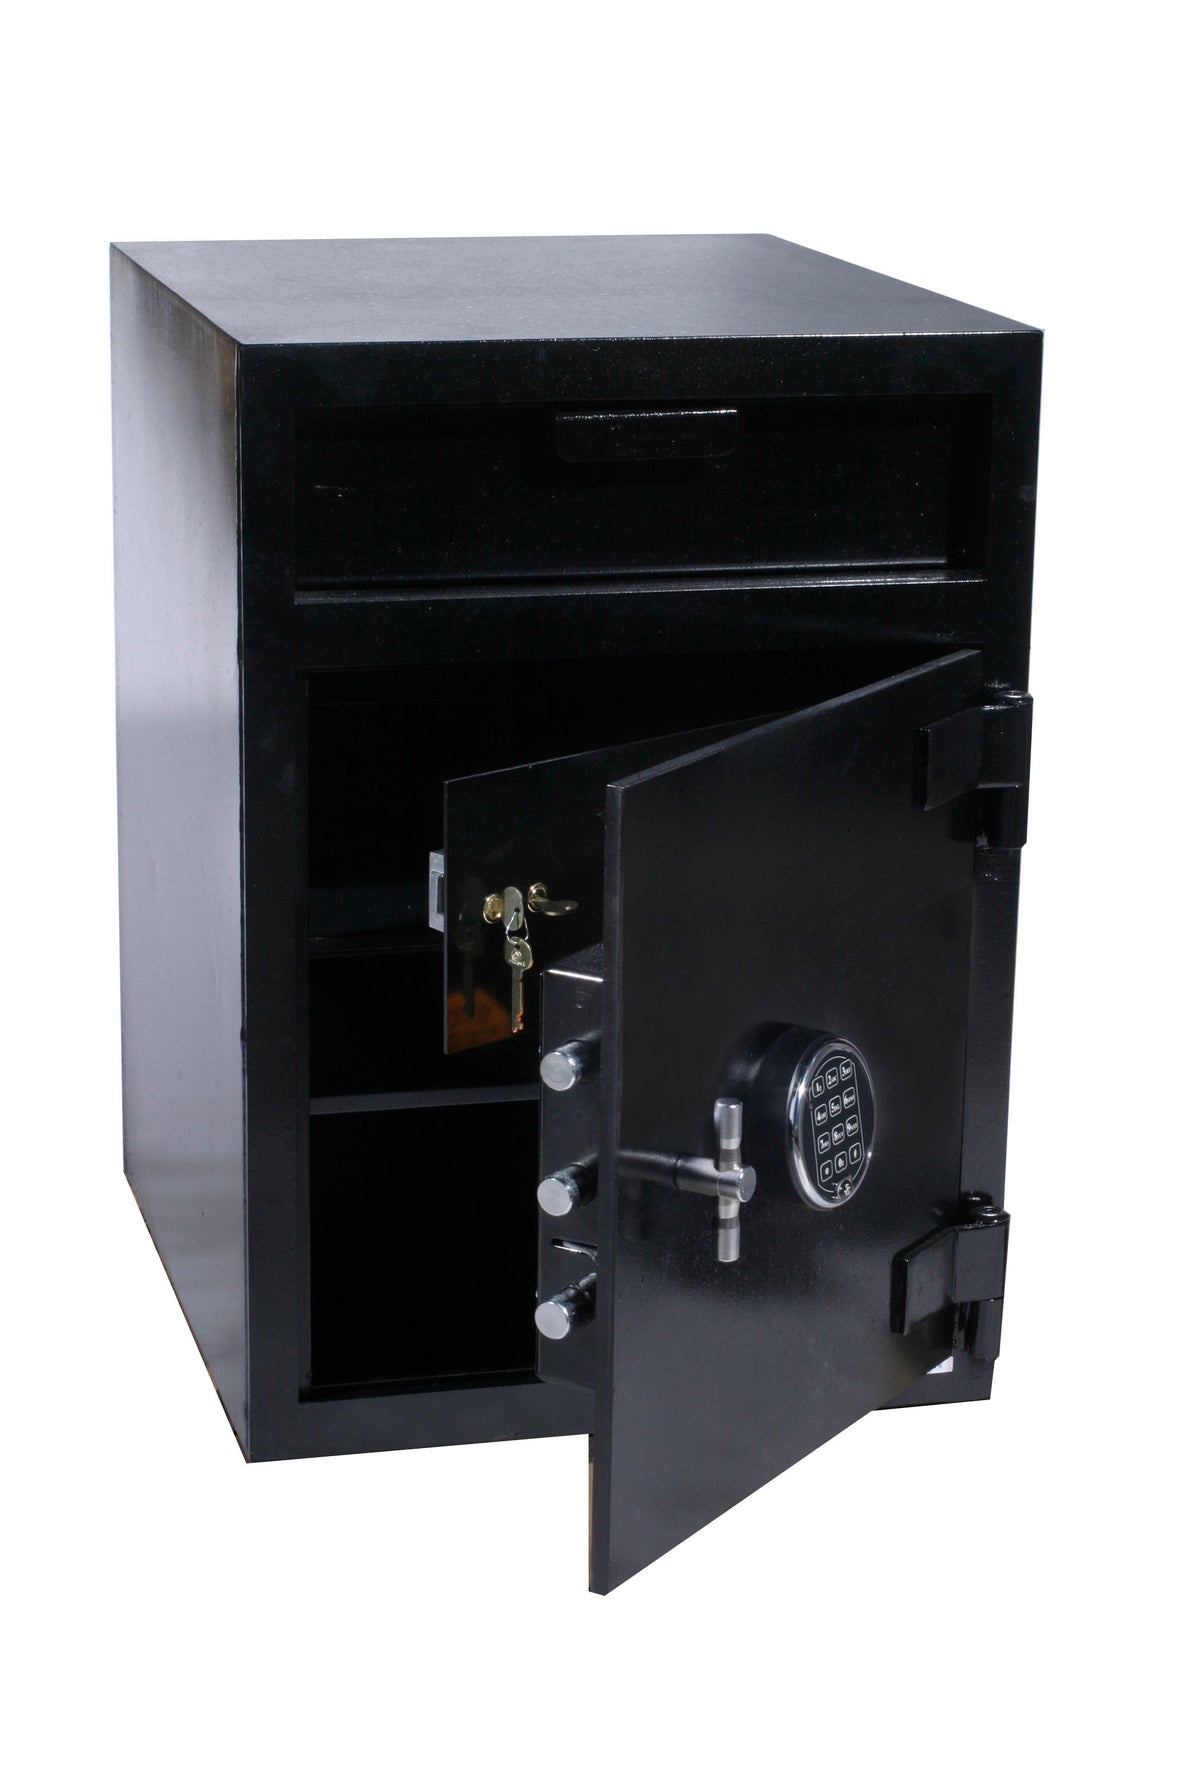 Cennox MB2720ICH-FK1 Depository Safe with Internal Locker Door Open